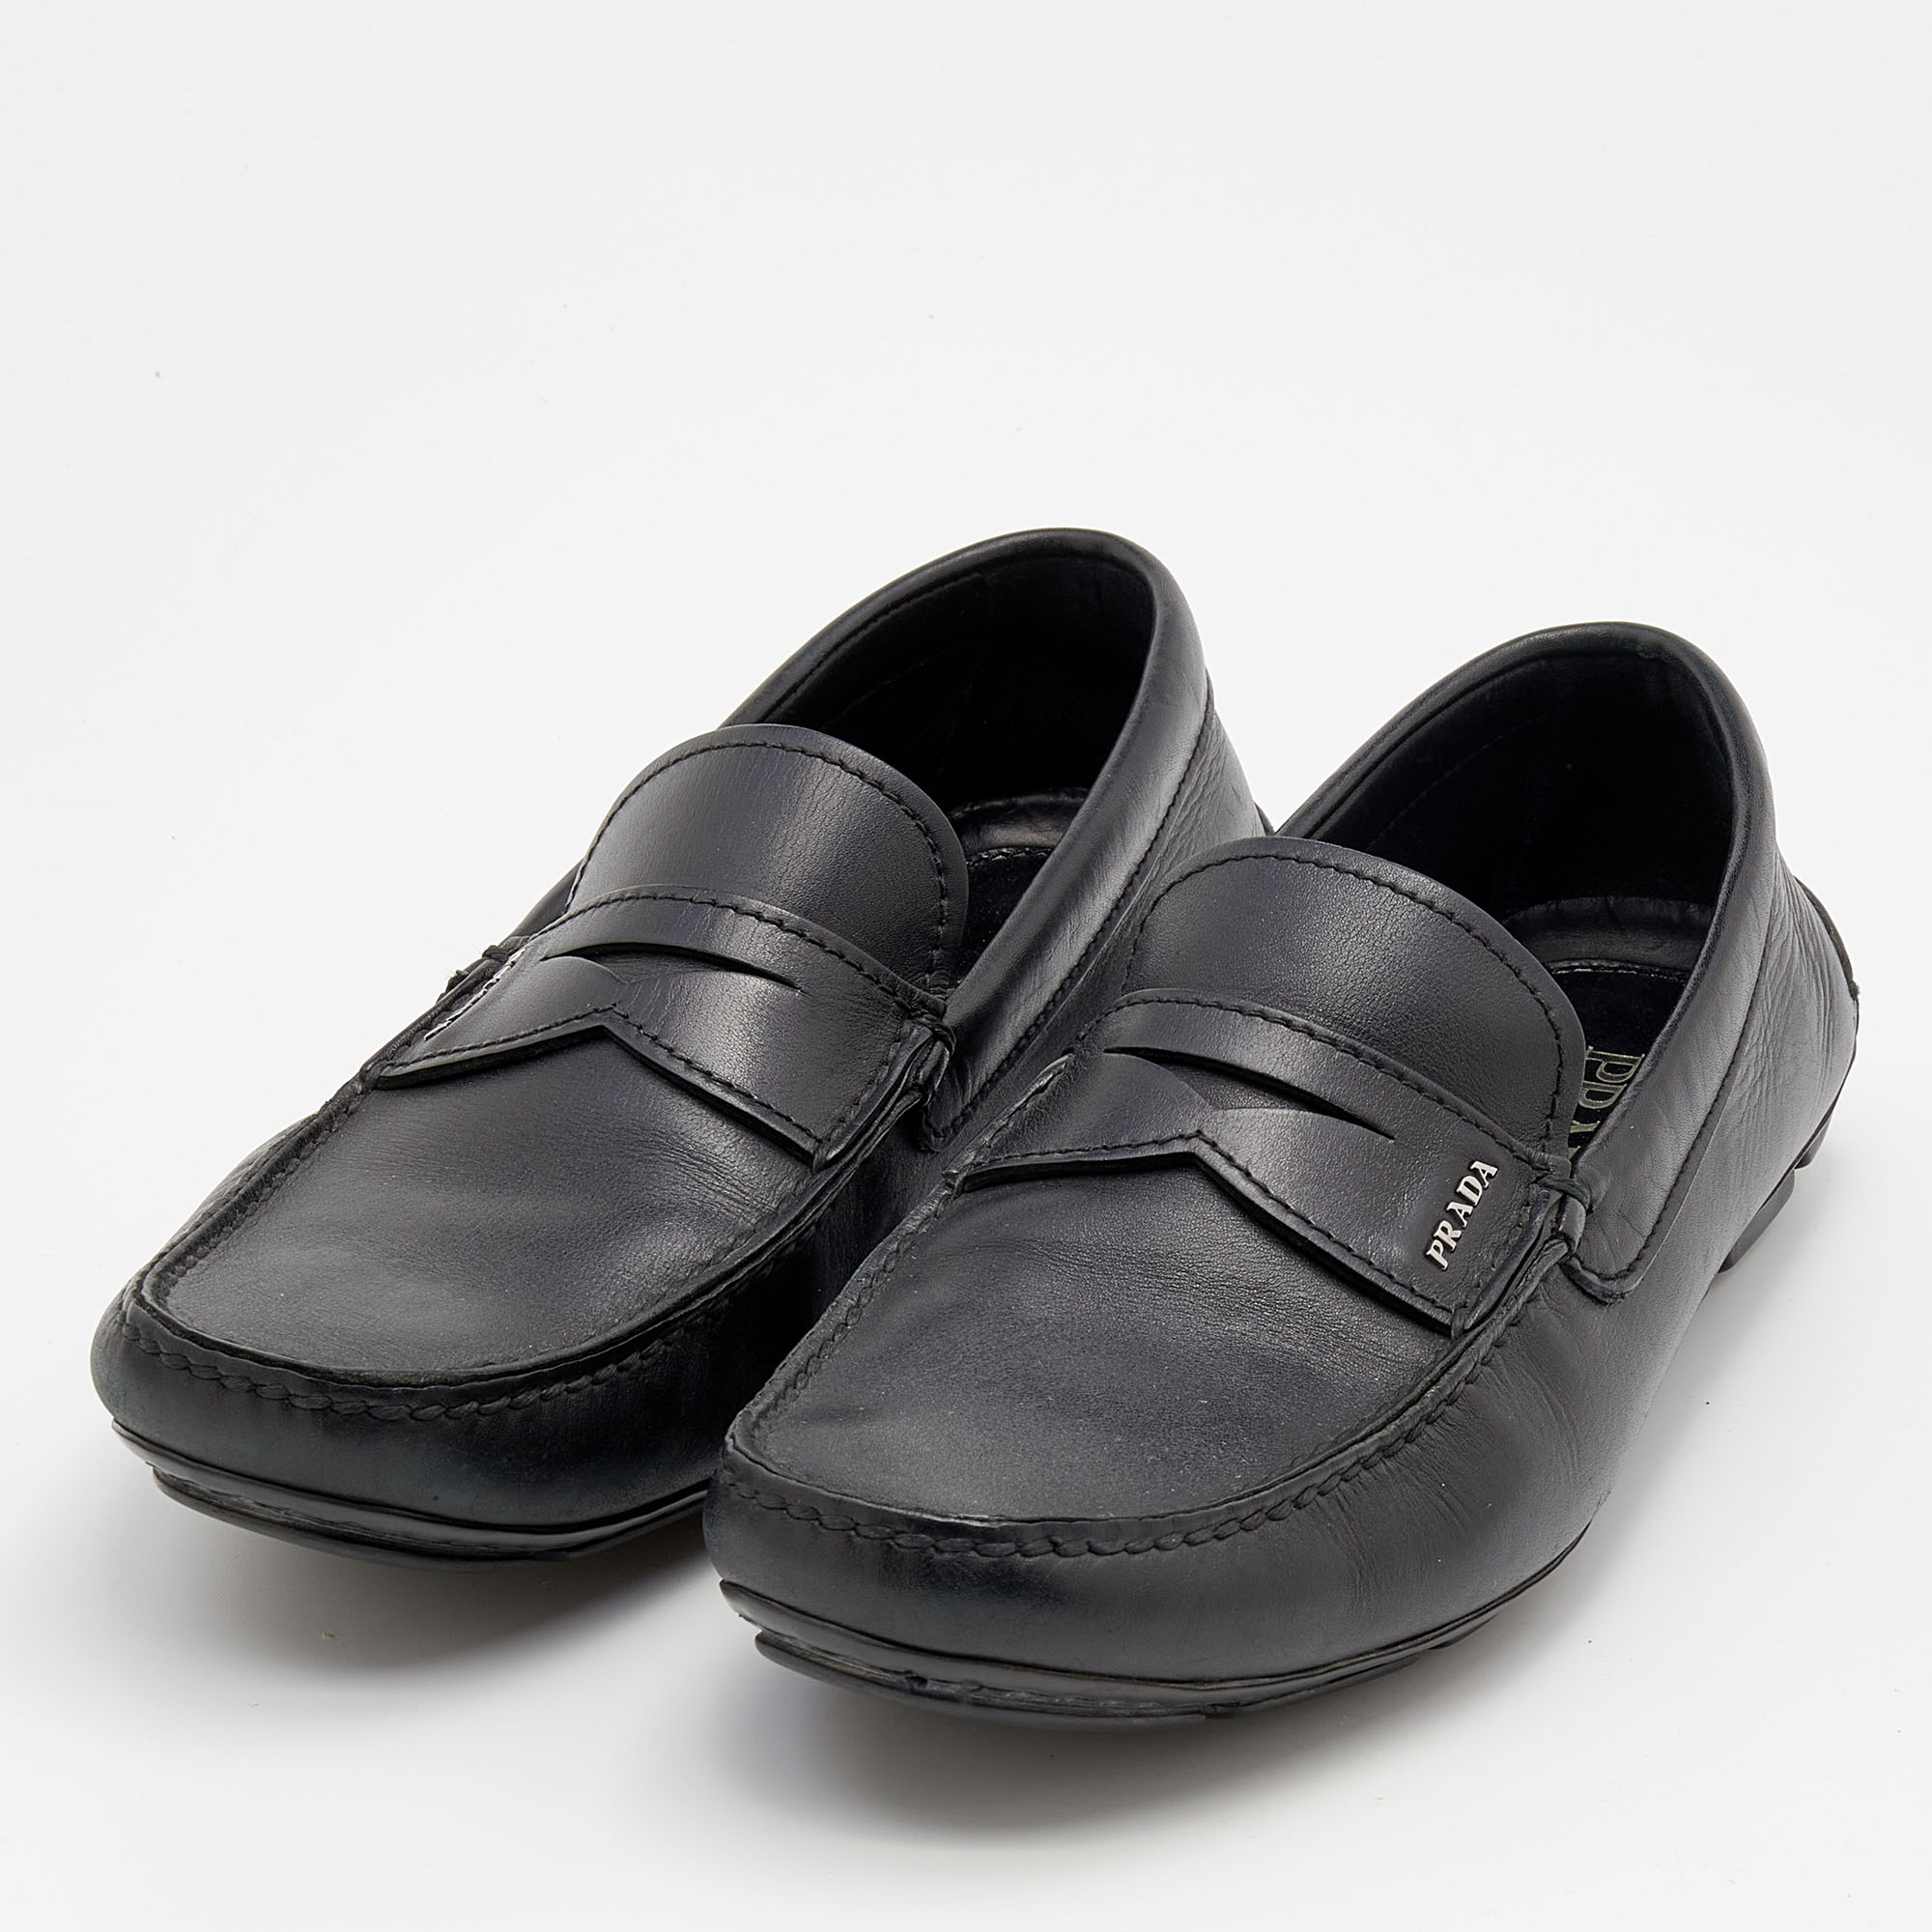 Prada Black Leather Slip On Loafers Size